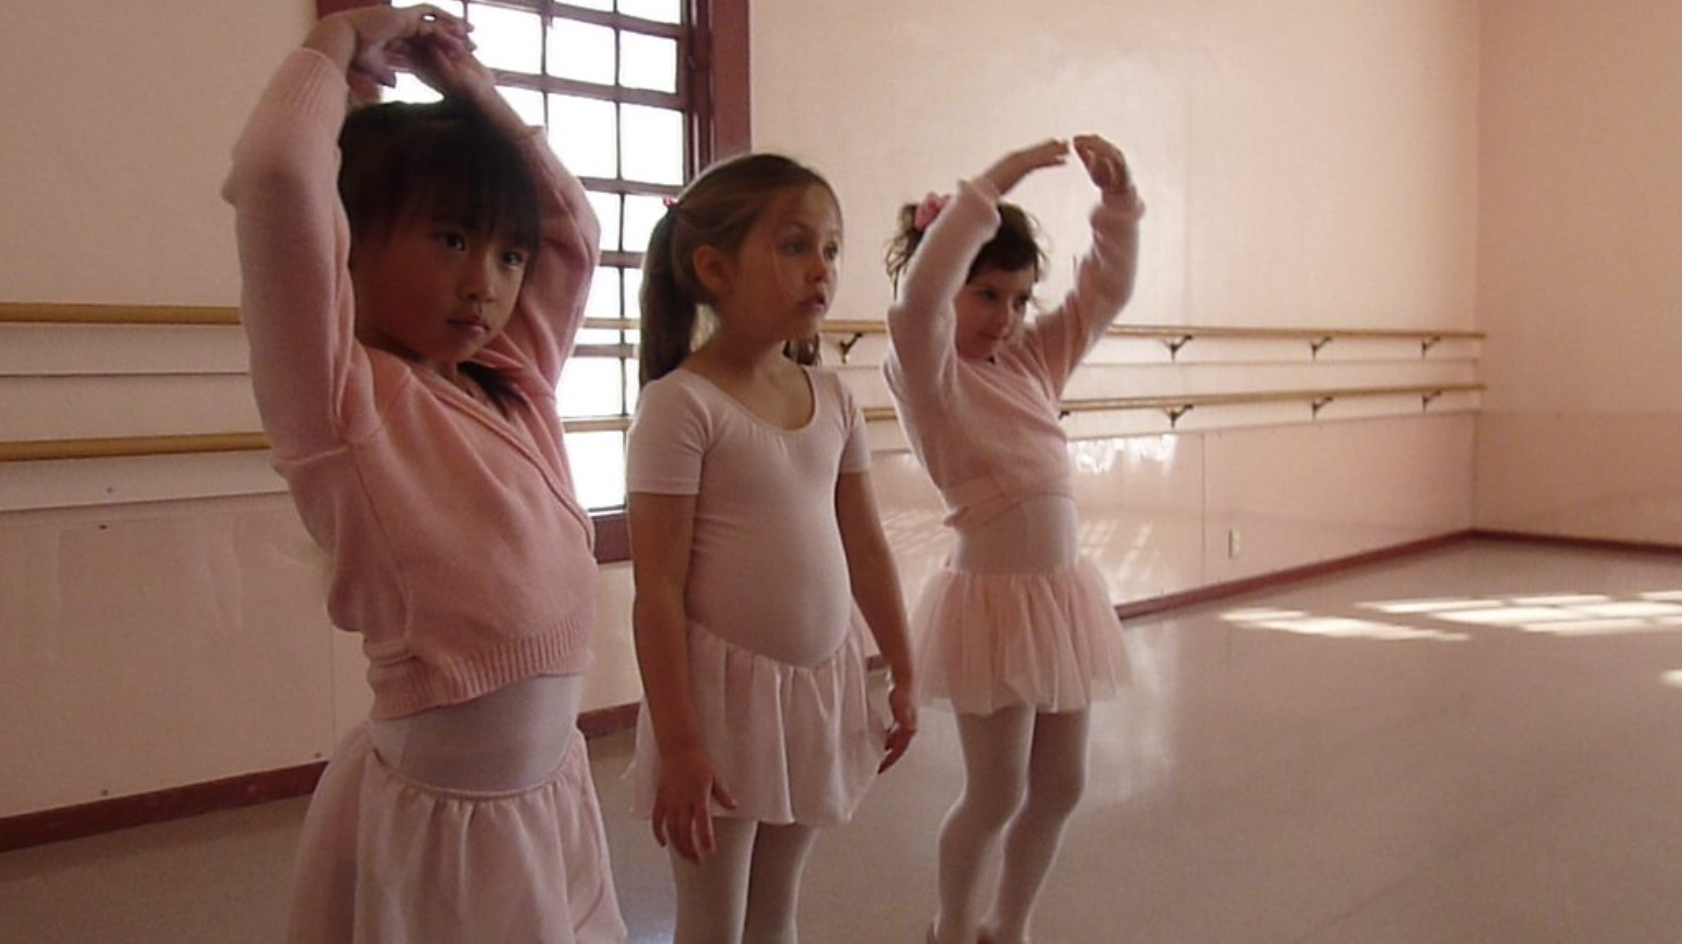 Girls in ballet class | Source: Flickr